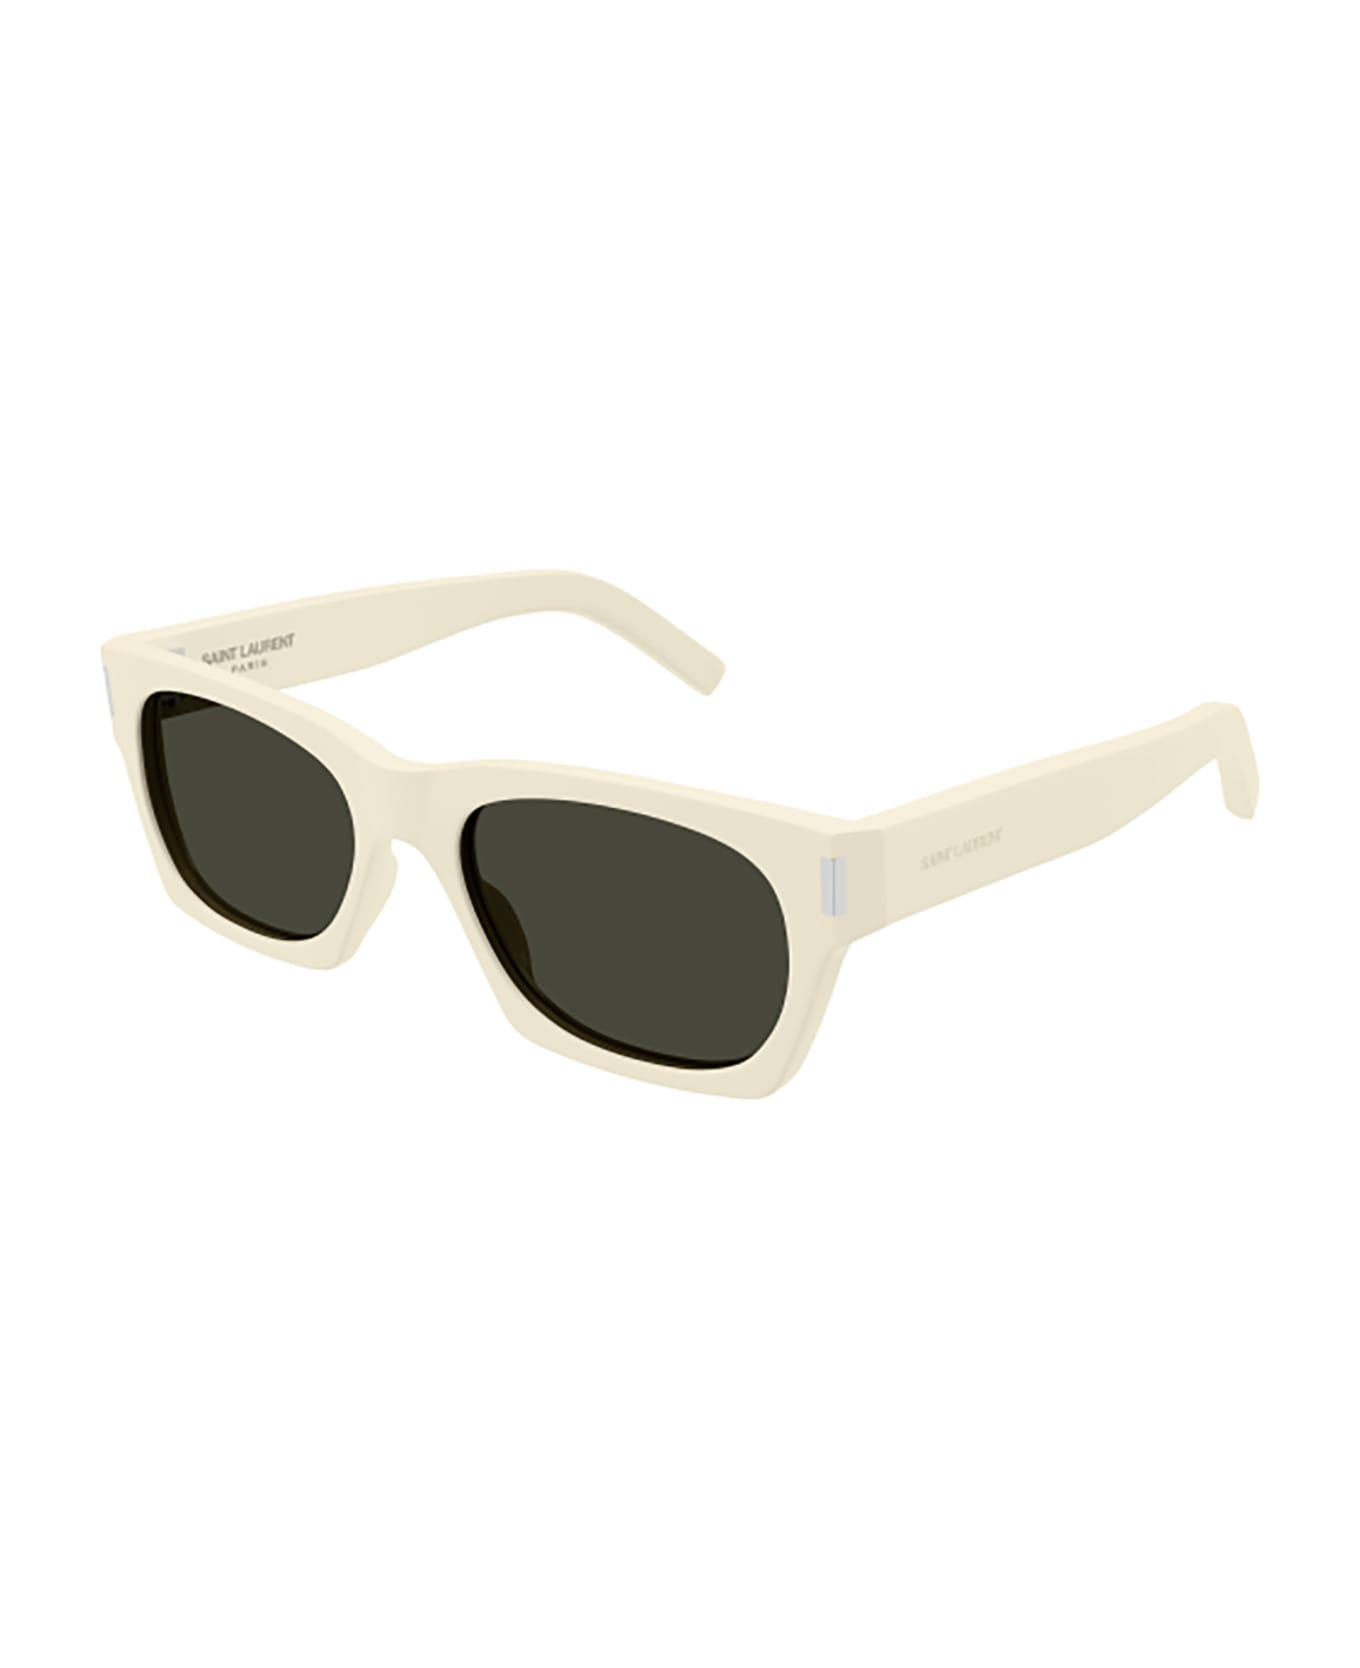 Saint Laurent Eyewear SL 402 Sunglasses - Ivory Ivory Grey サングラス